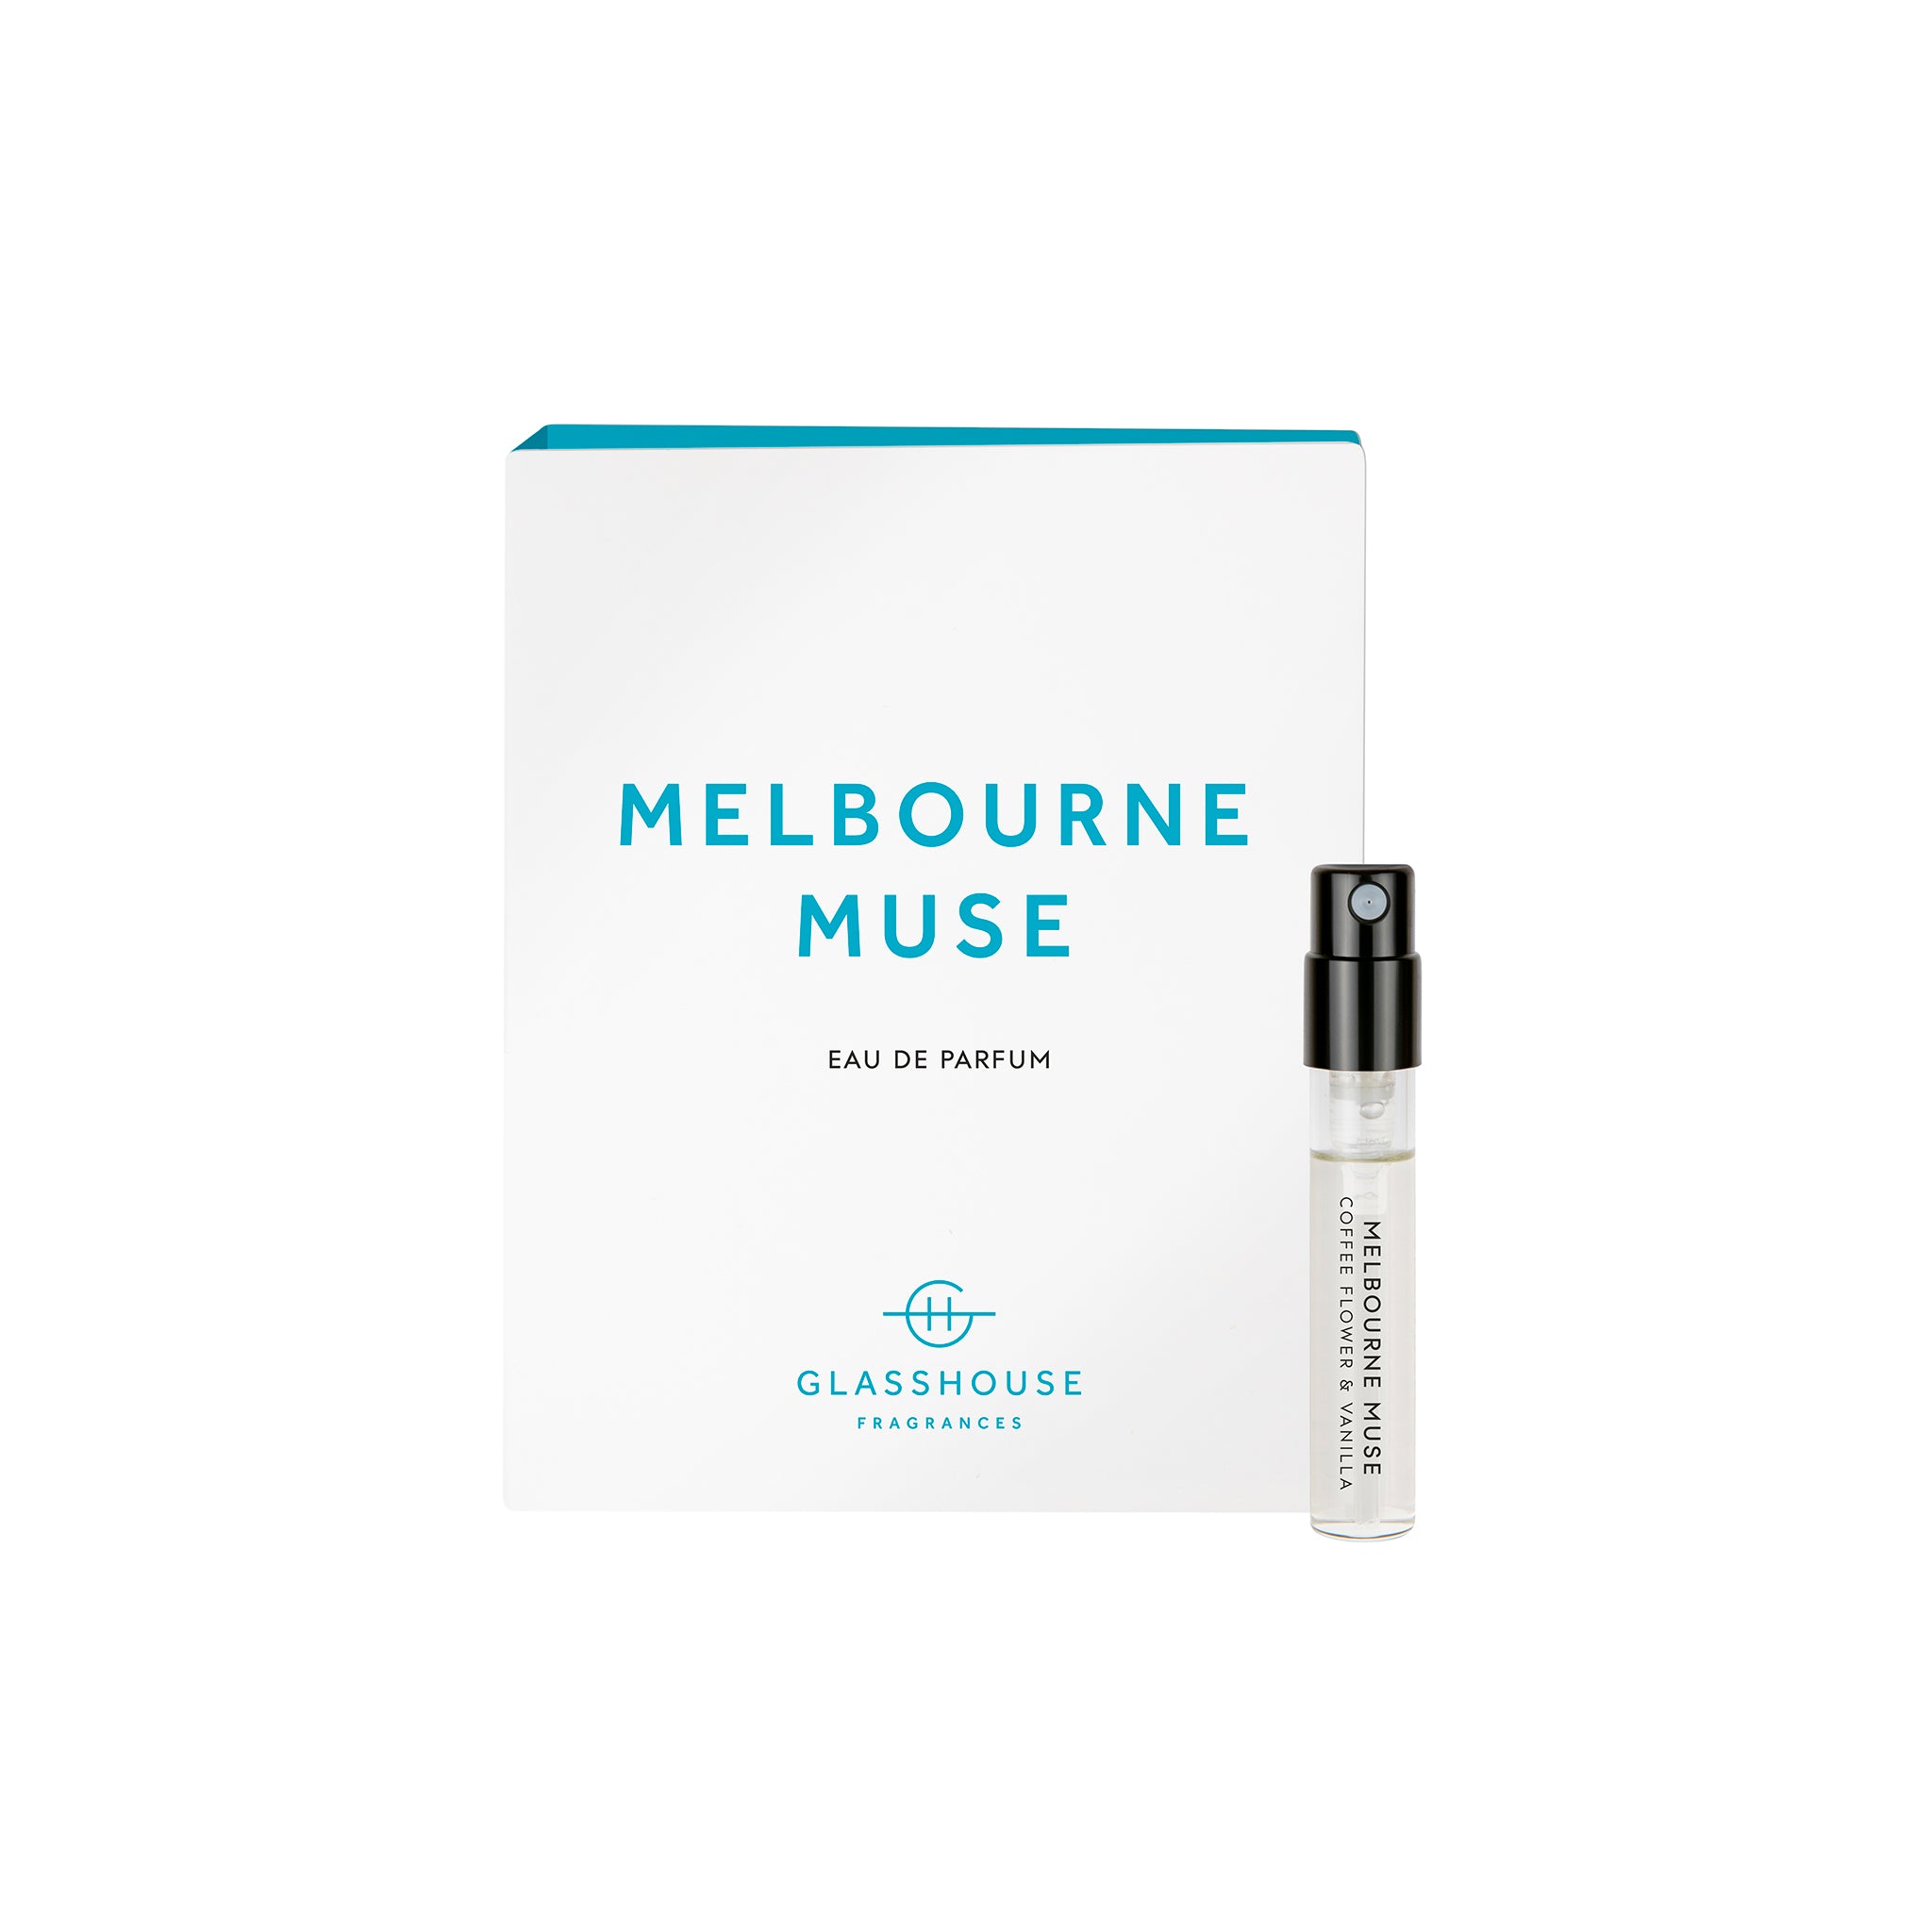 Melbourne Muse